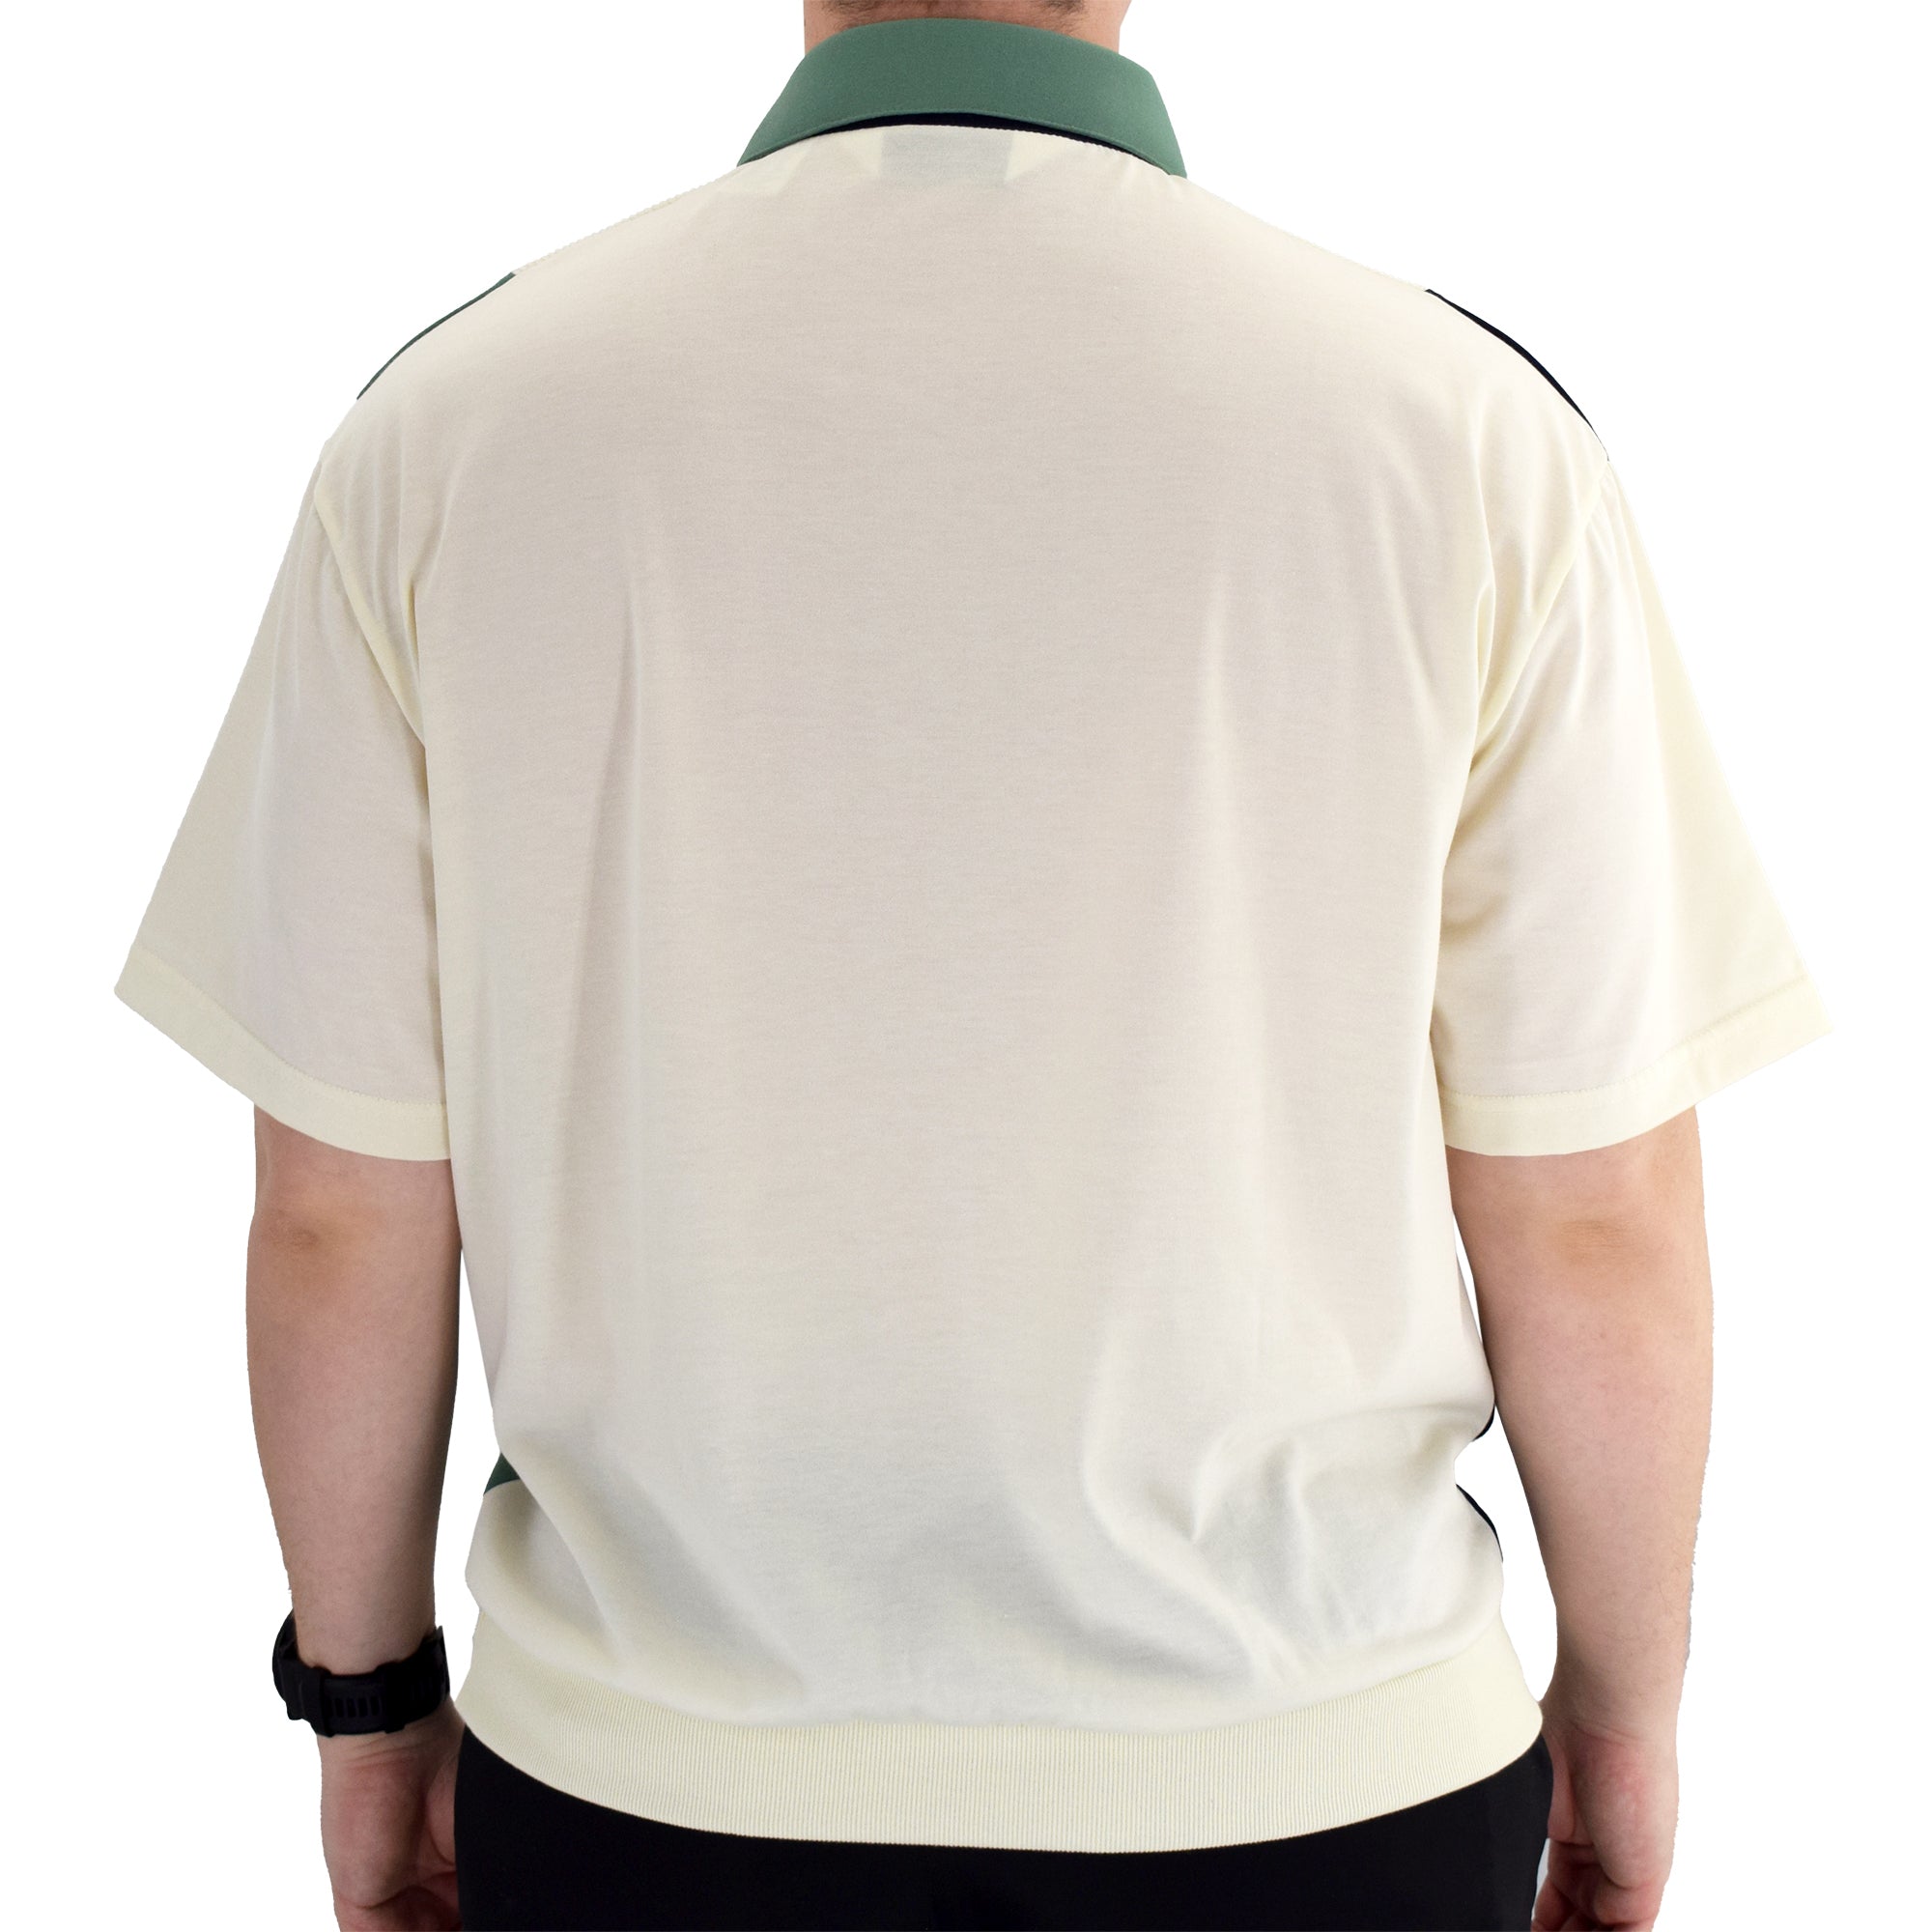 Classics By Palmland Knit Banded Bottom Shirt - 6010-121 Sage - bandedbottom